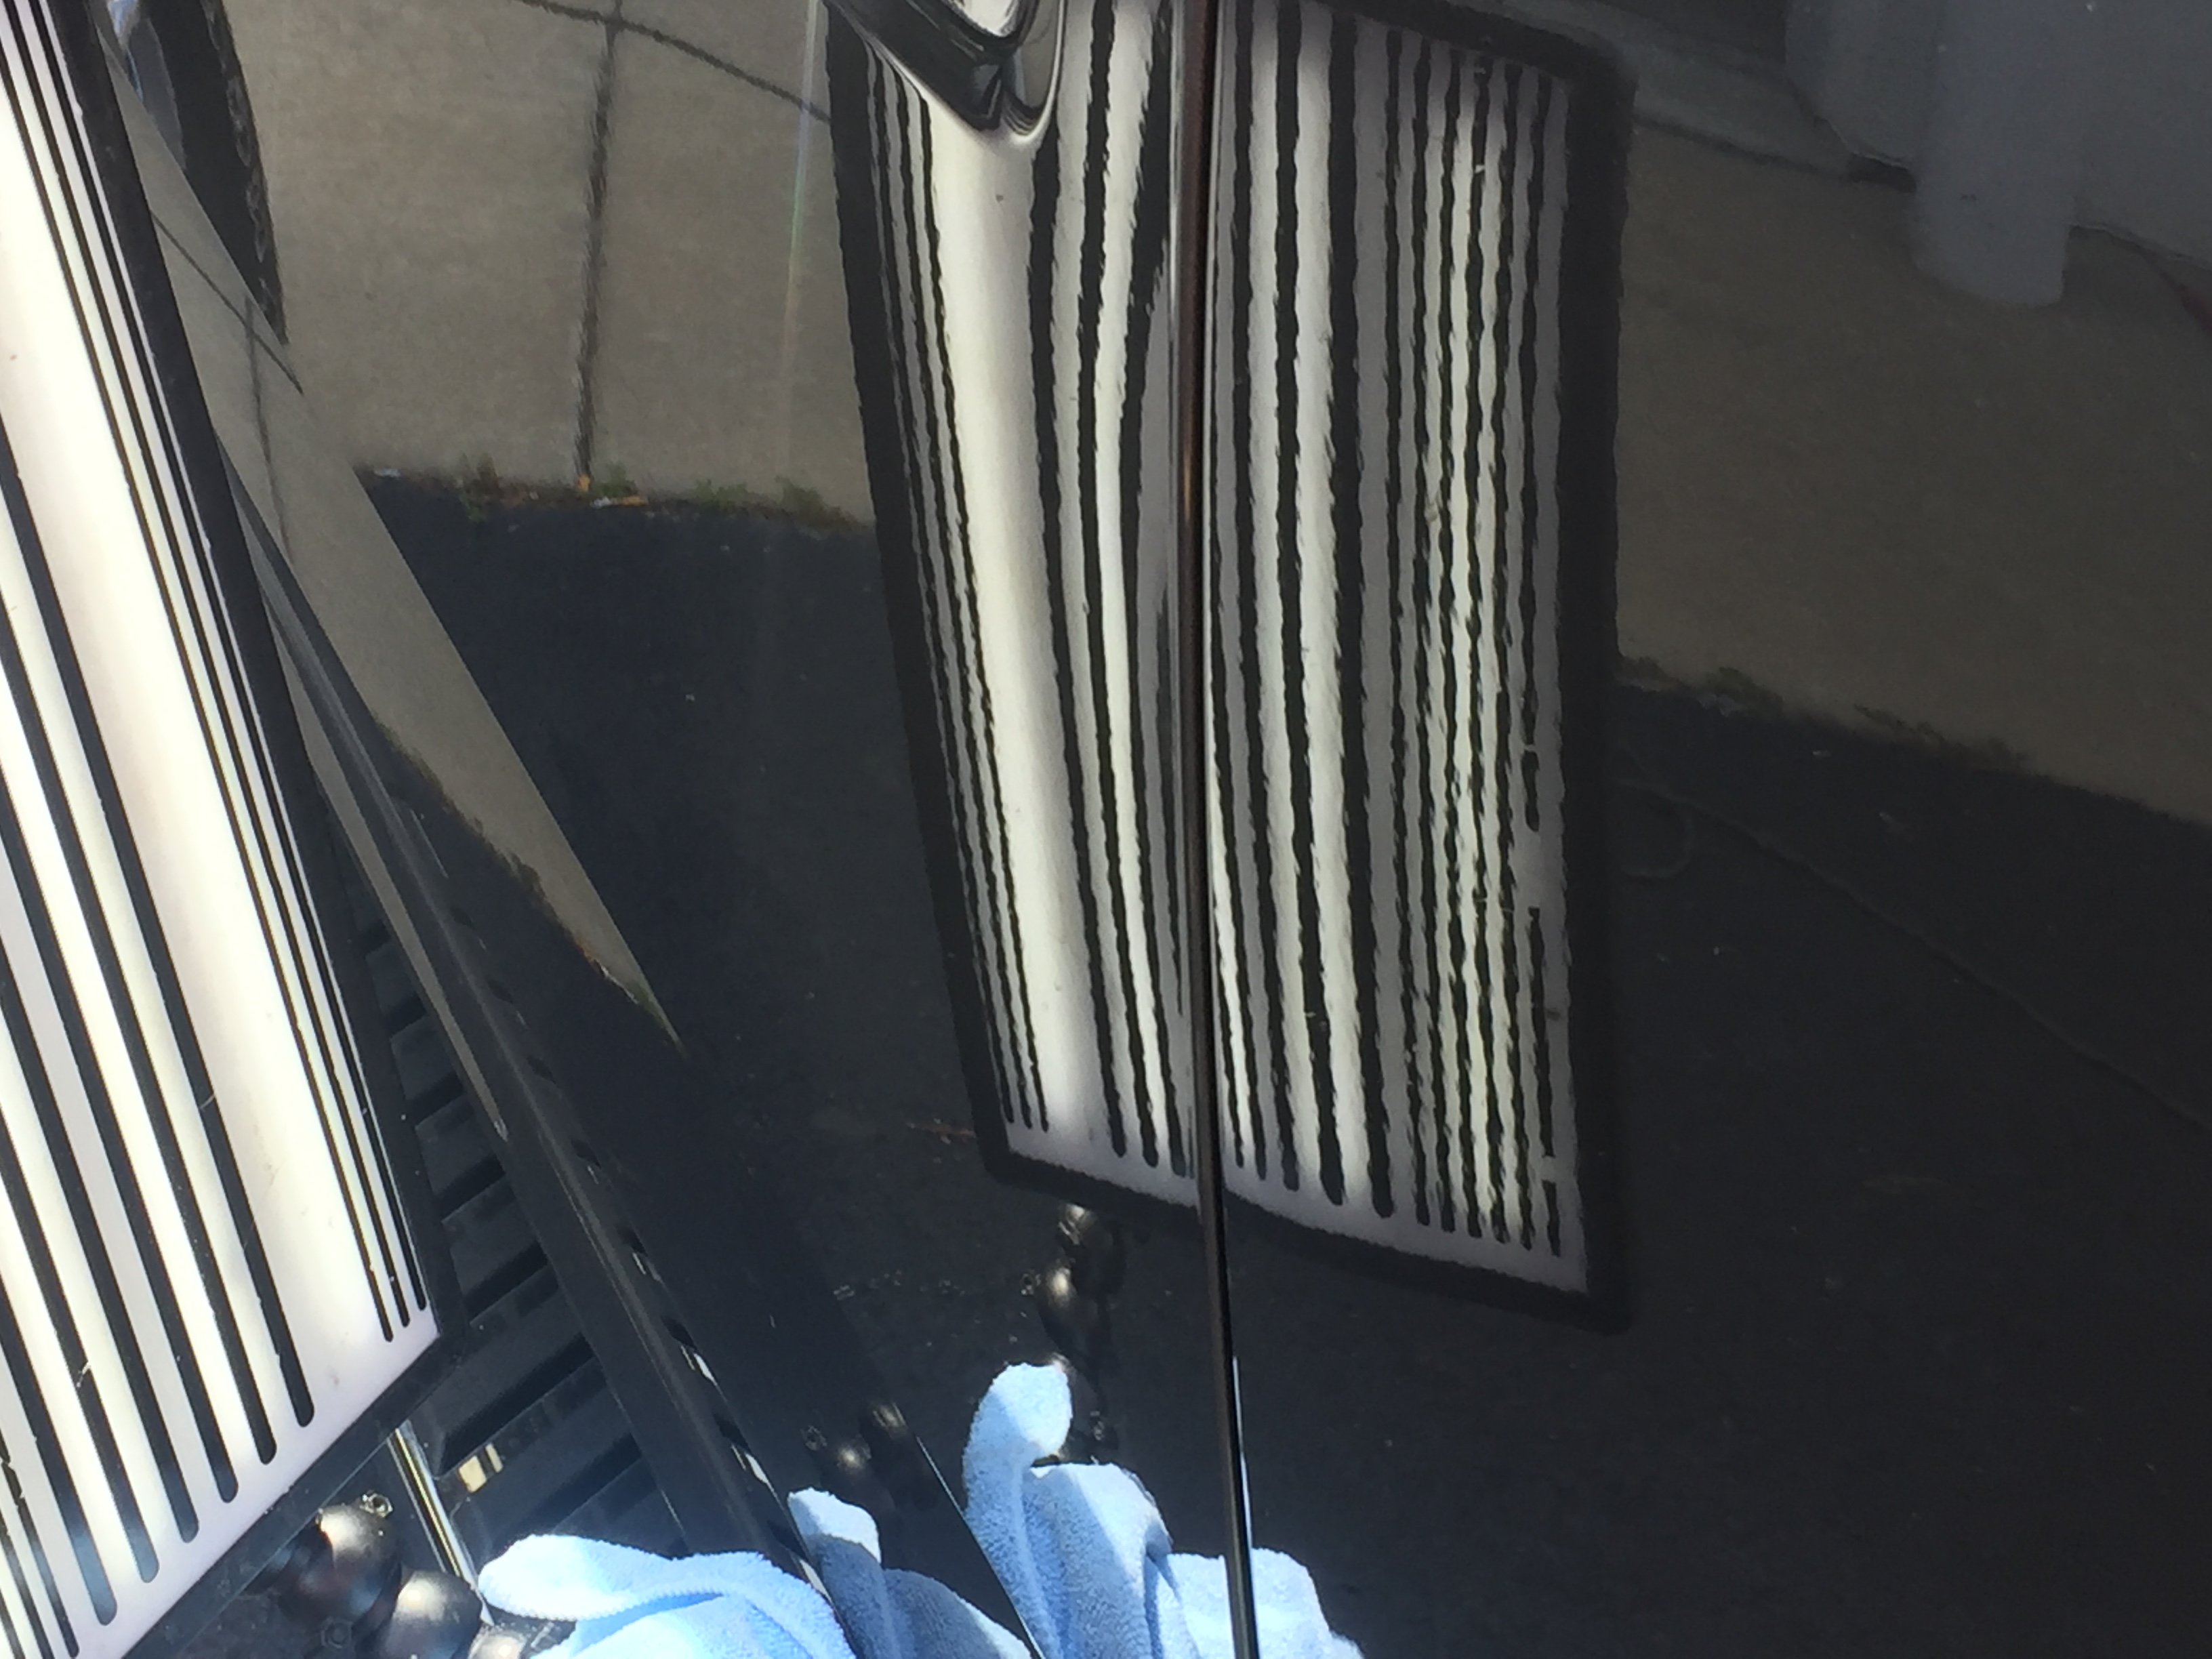 www.217dent.com 2015 Grey Aluminum Ford F-150 driver's side door dent removal near door-handle.